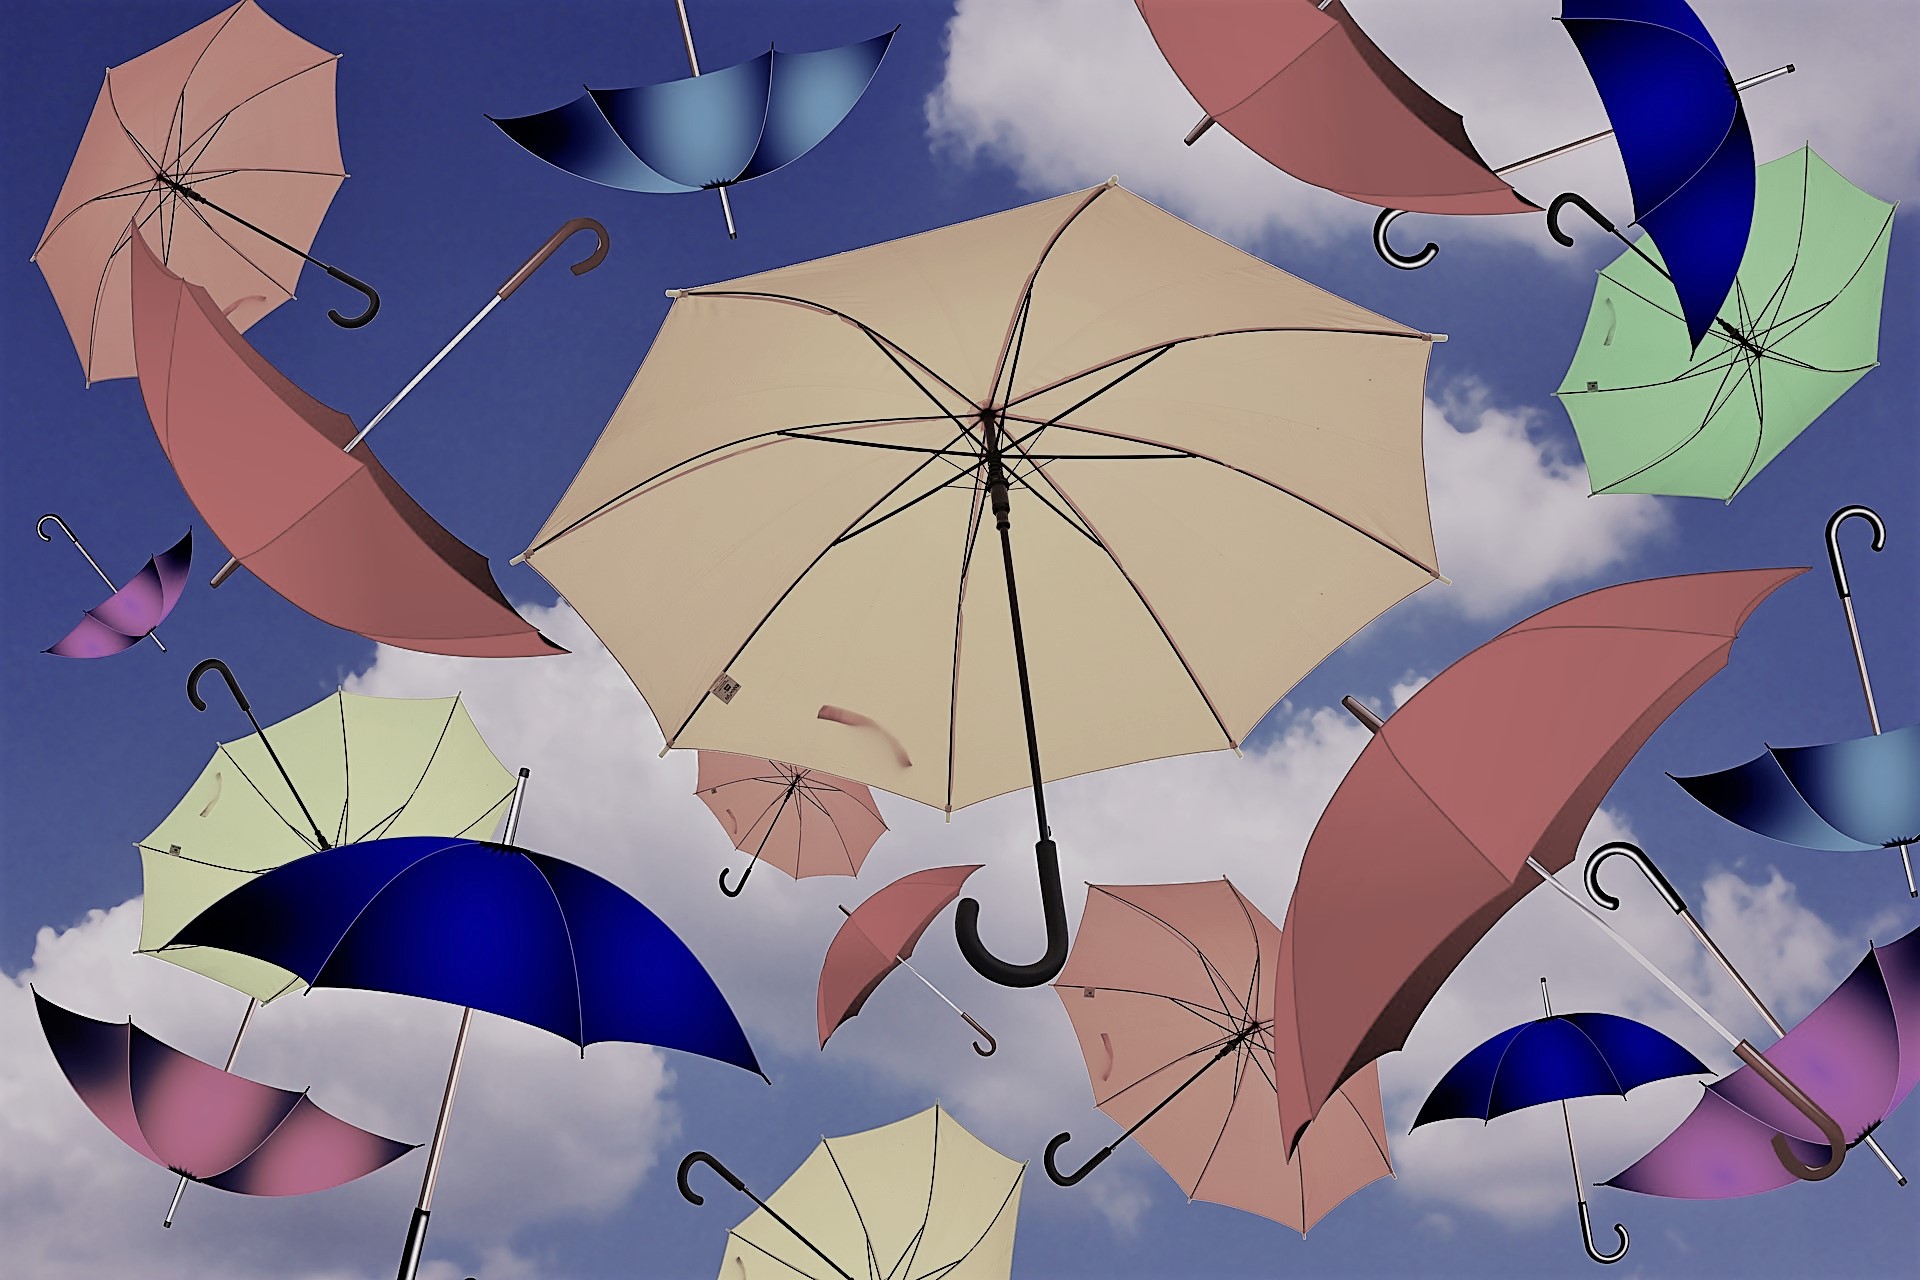 new-hmrc-guidance-on-umbrella-companies-does-not-go-far-enough-says